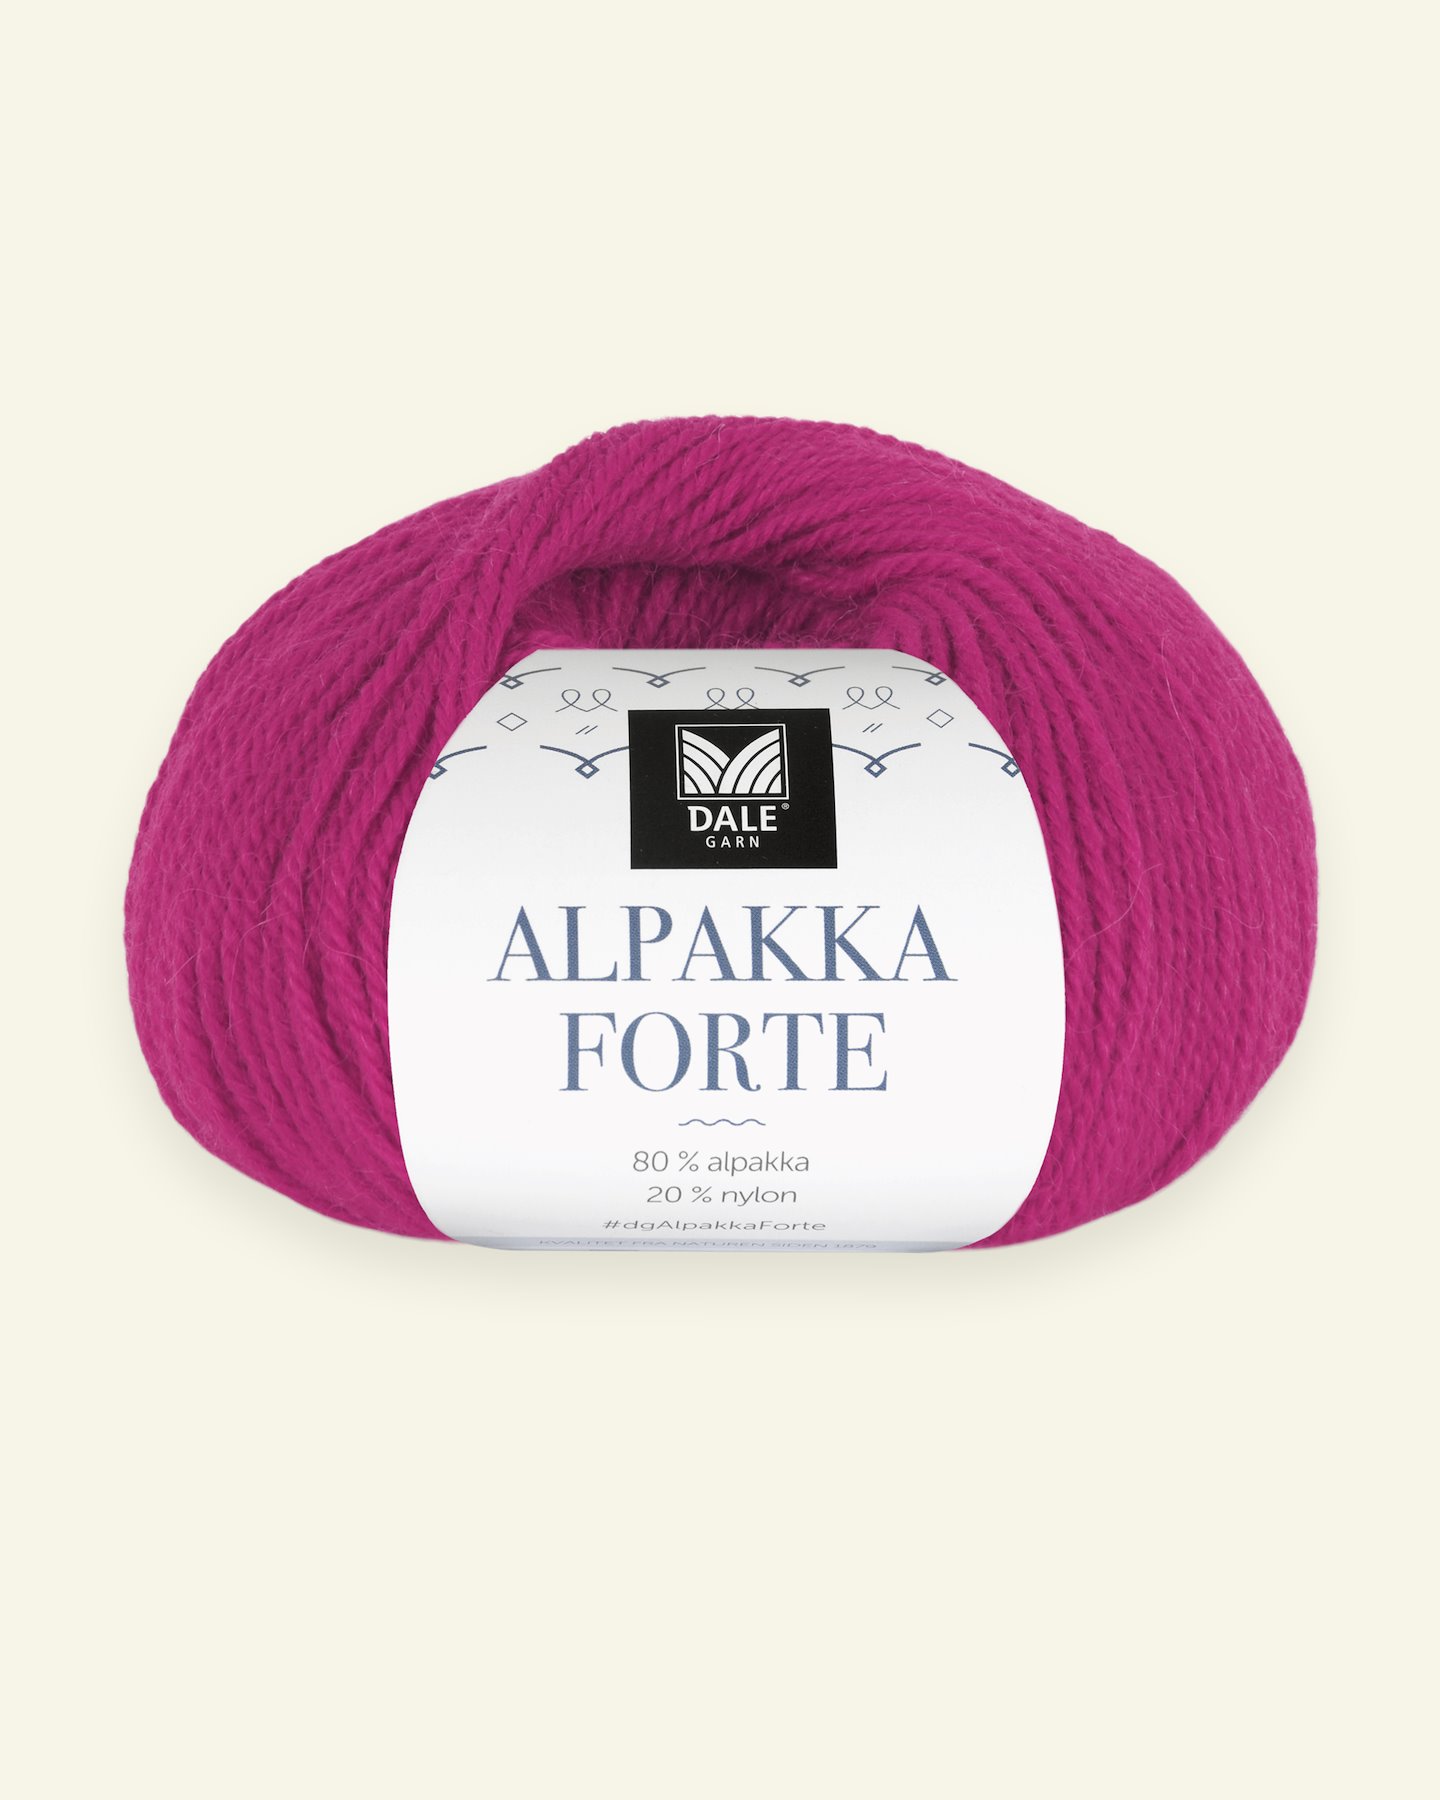 Dale Garn, Alpakawolle "Alpakka Forte", pink (744) 90000467_pack